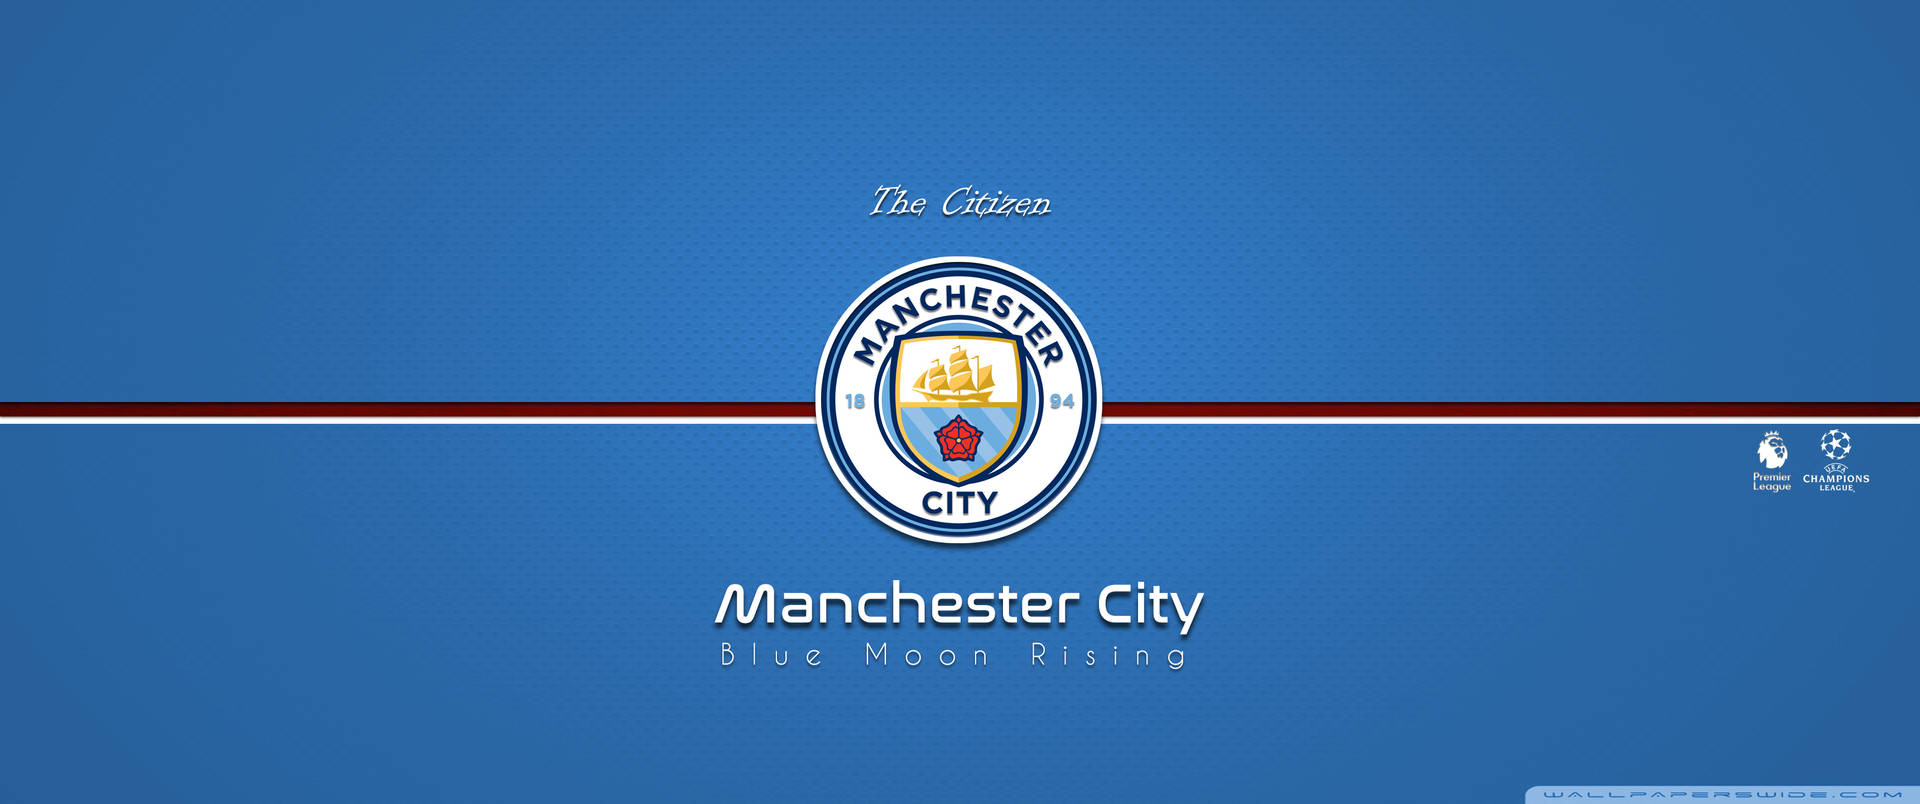 Manchester City 4k Blue Moon Rising